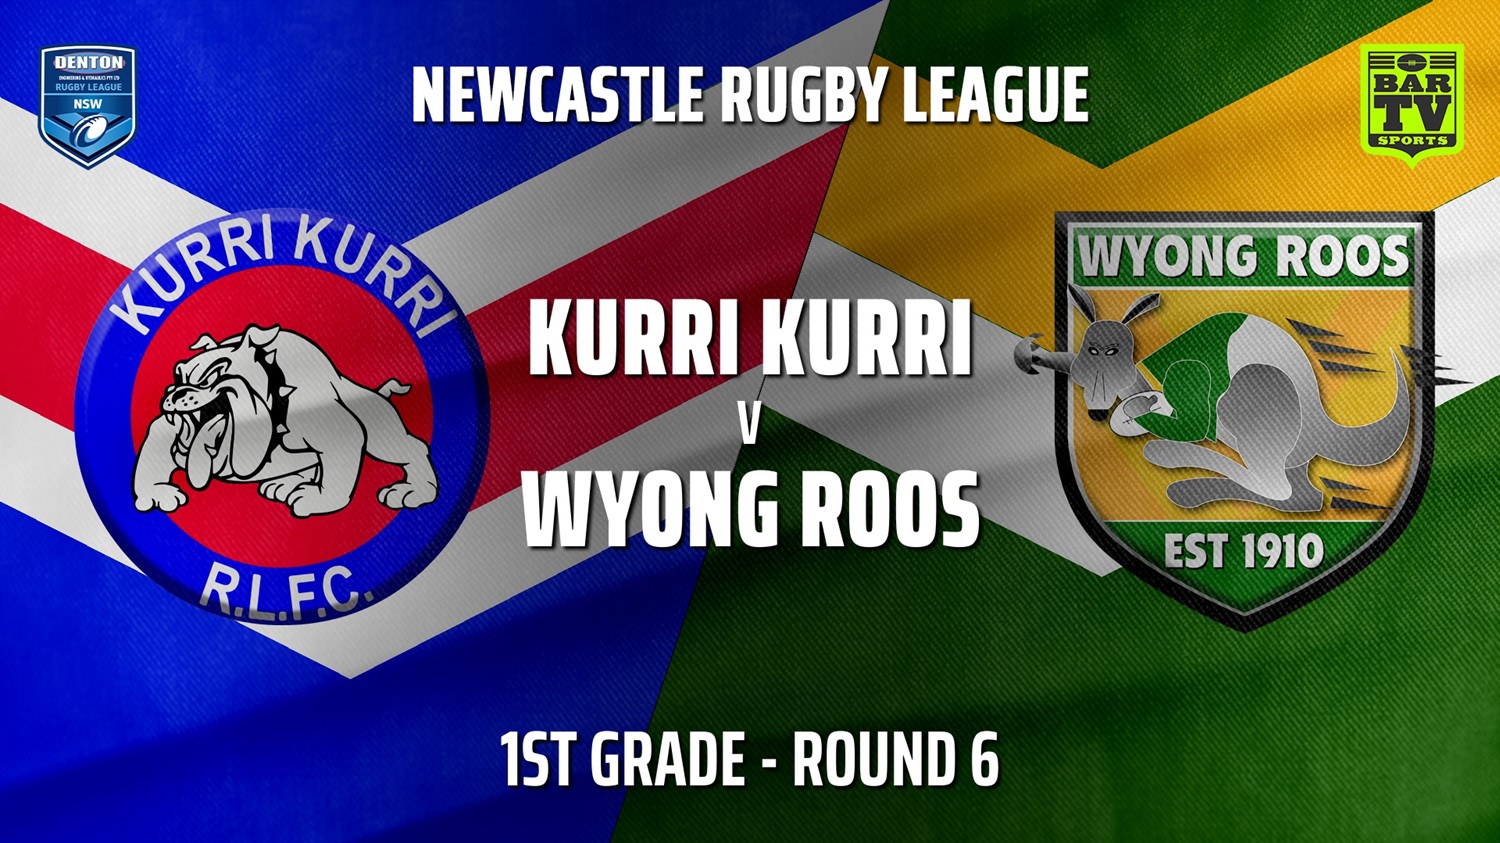 210501-Newcastle Rugby League Round 6 - 1st Grade - Kurri Kurri Bulldogs v Wyong Roos Slate Image